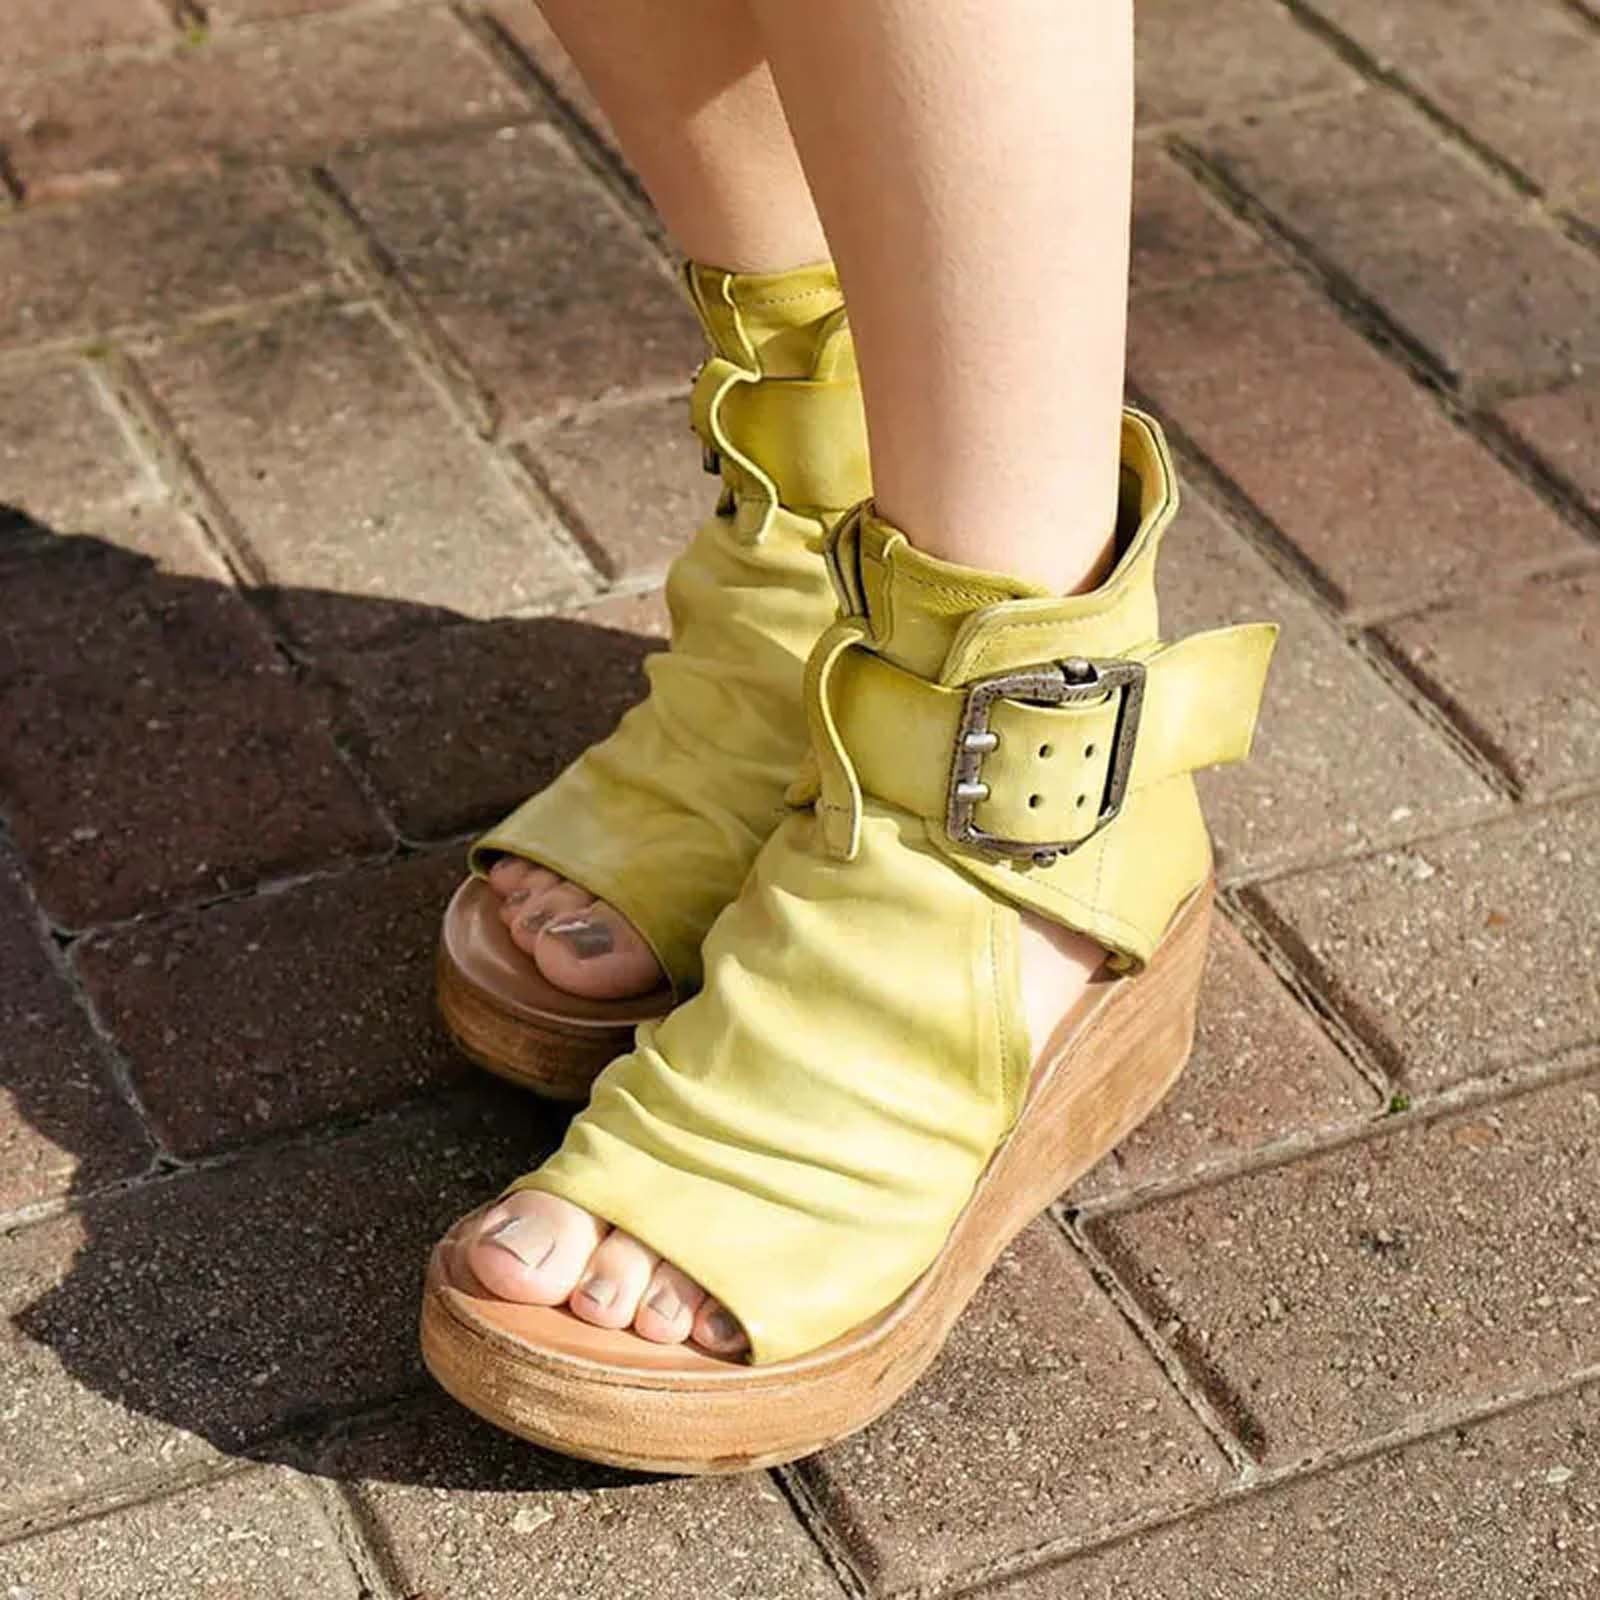 Women Summer Sandals Fashion Fish Mouth Thick Bottom Espadrilles Wedges Casual Buckle Strap Roman Platform Shoes